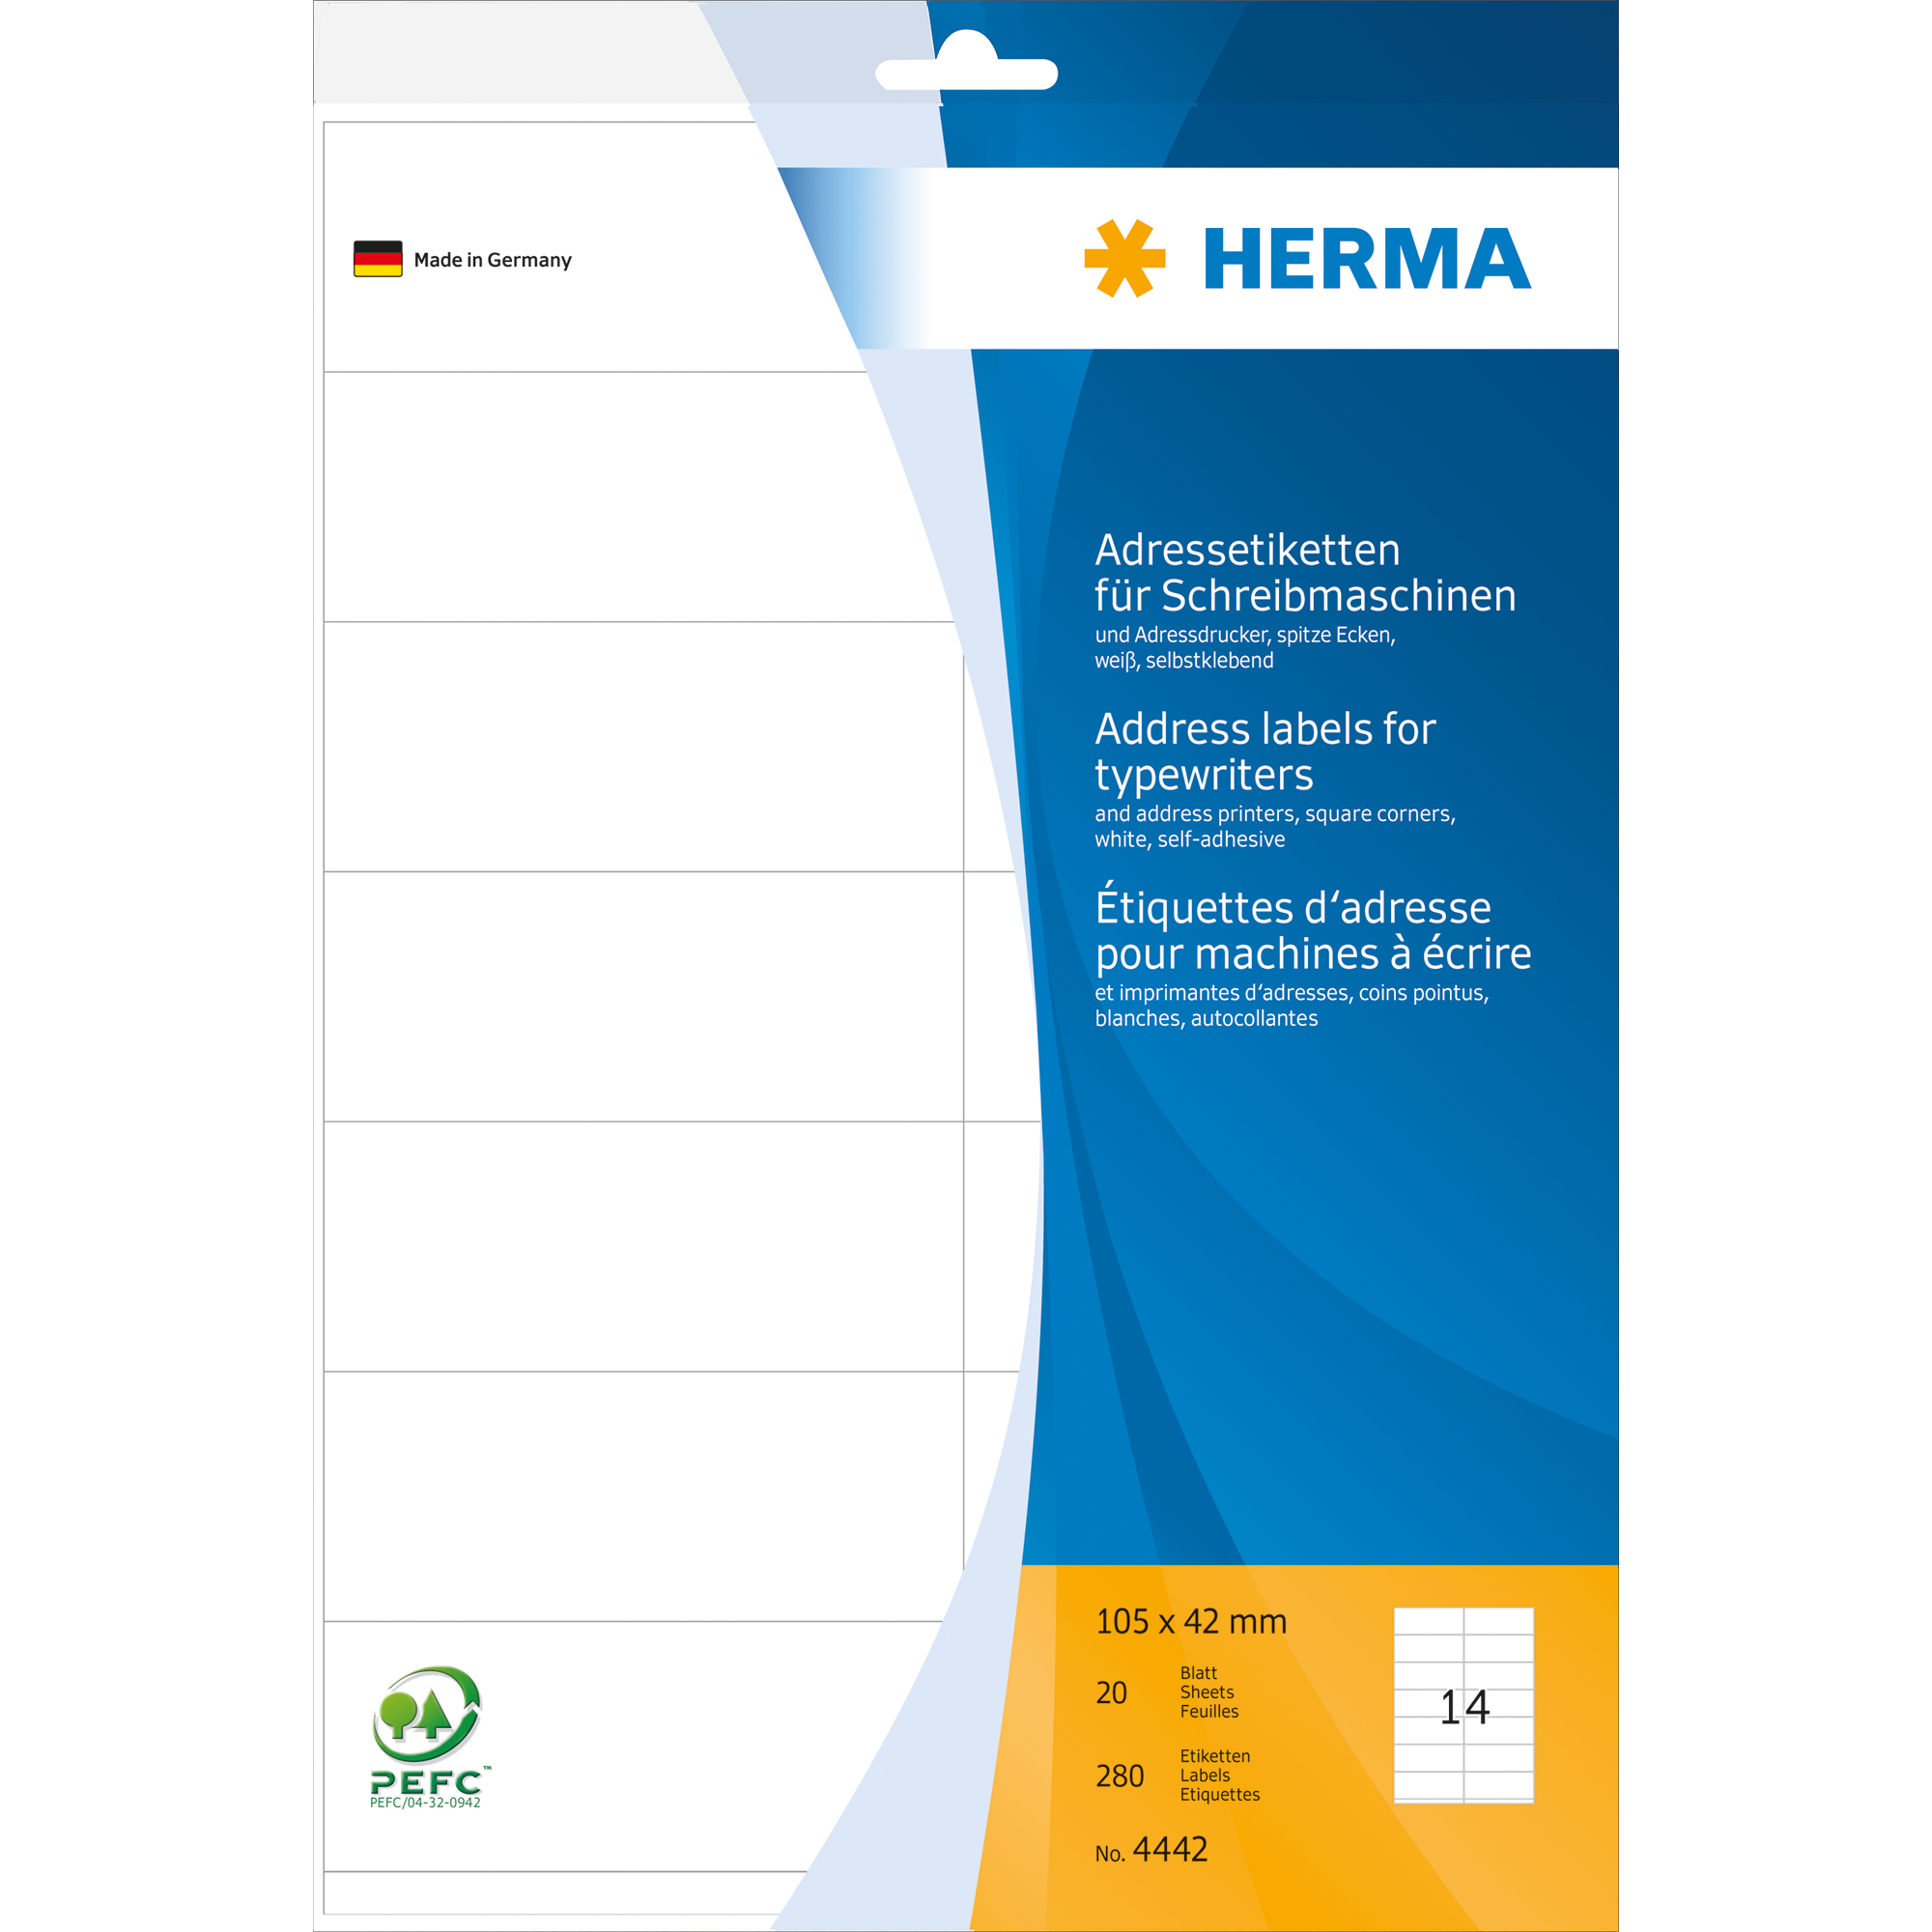 HERMA Adressetikett 105 x 42 mm, weiß